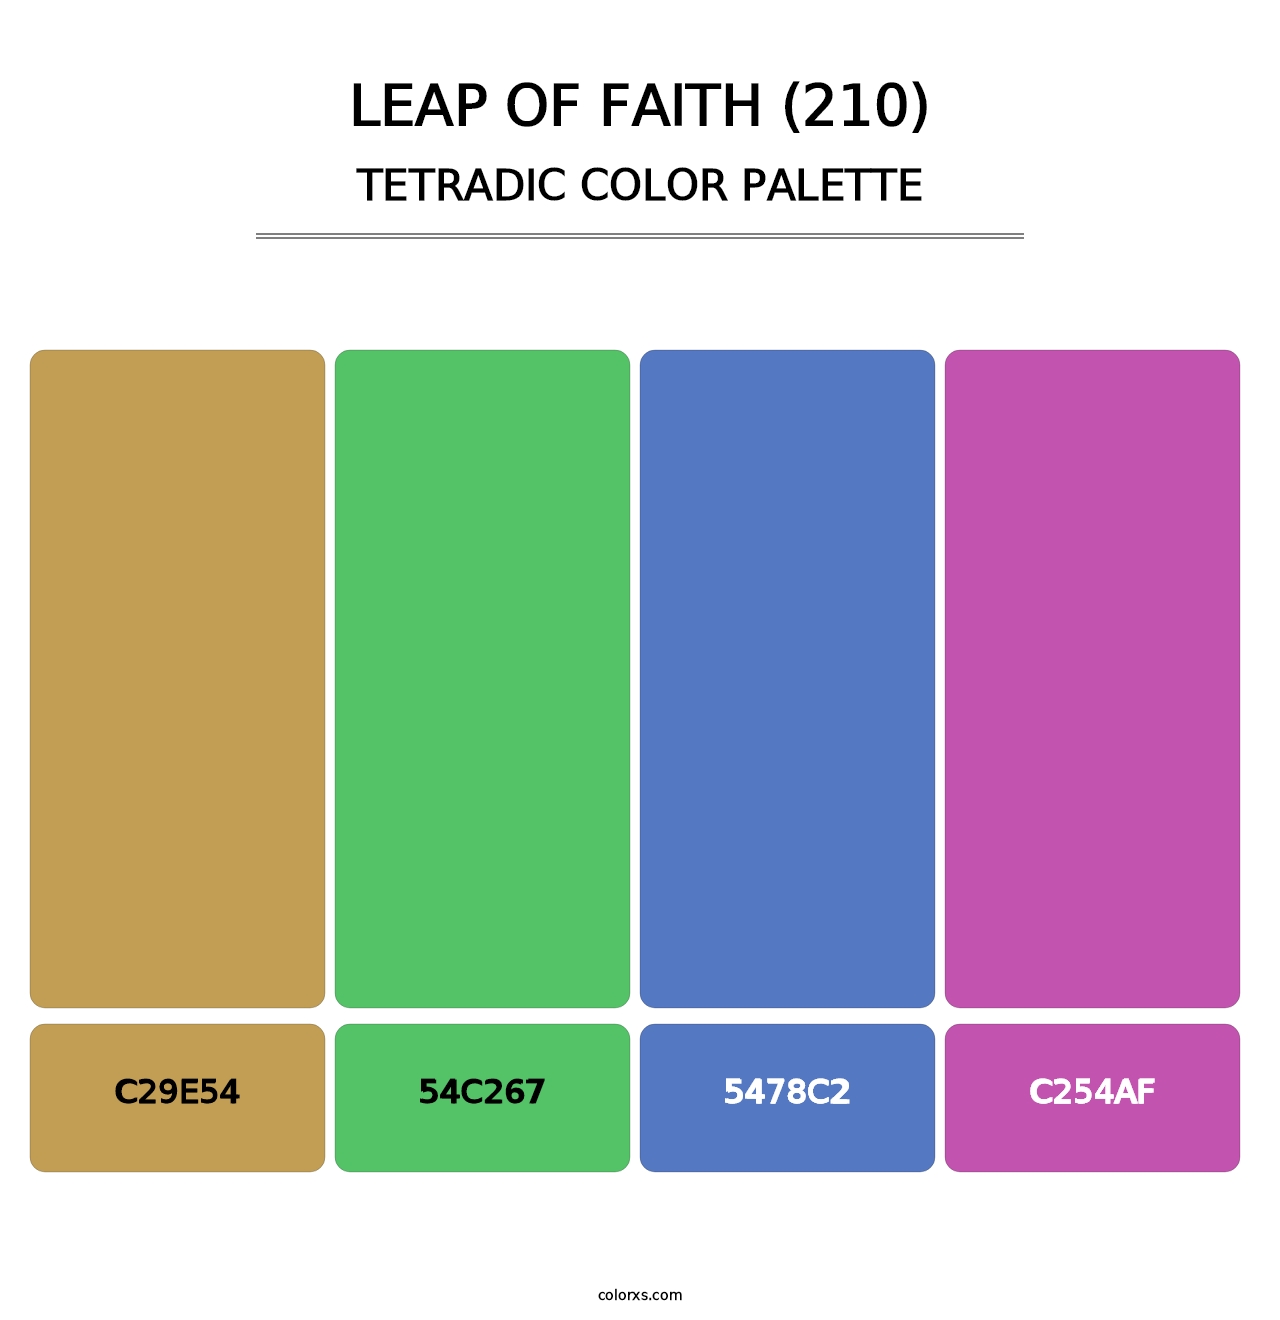 Leap of Faith (210) - Tetradic Color Palette